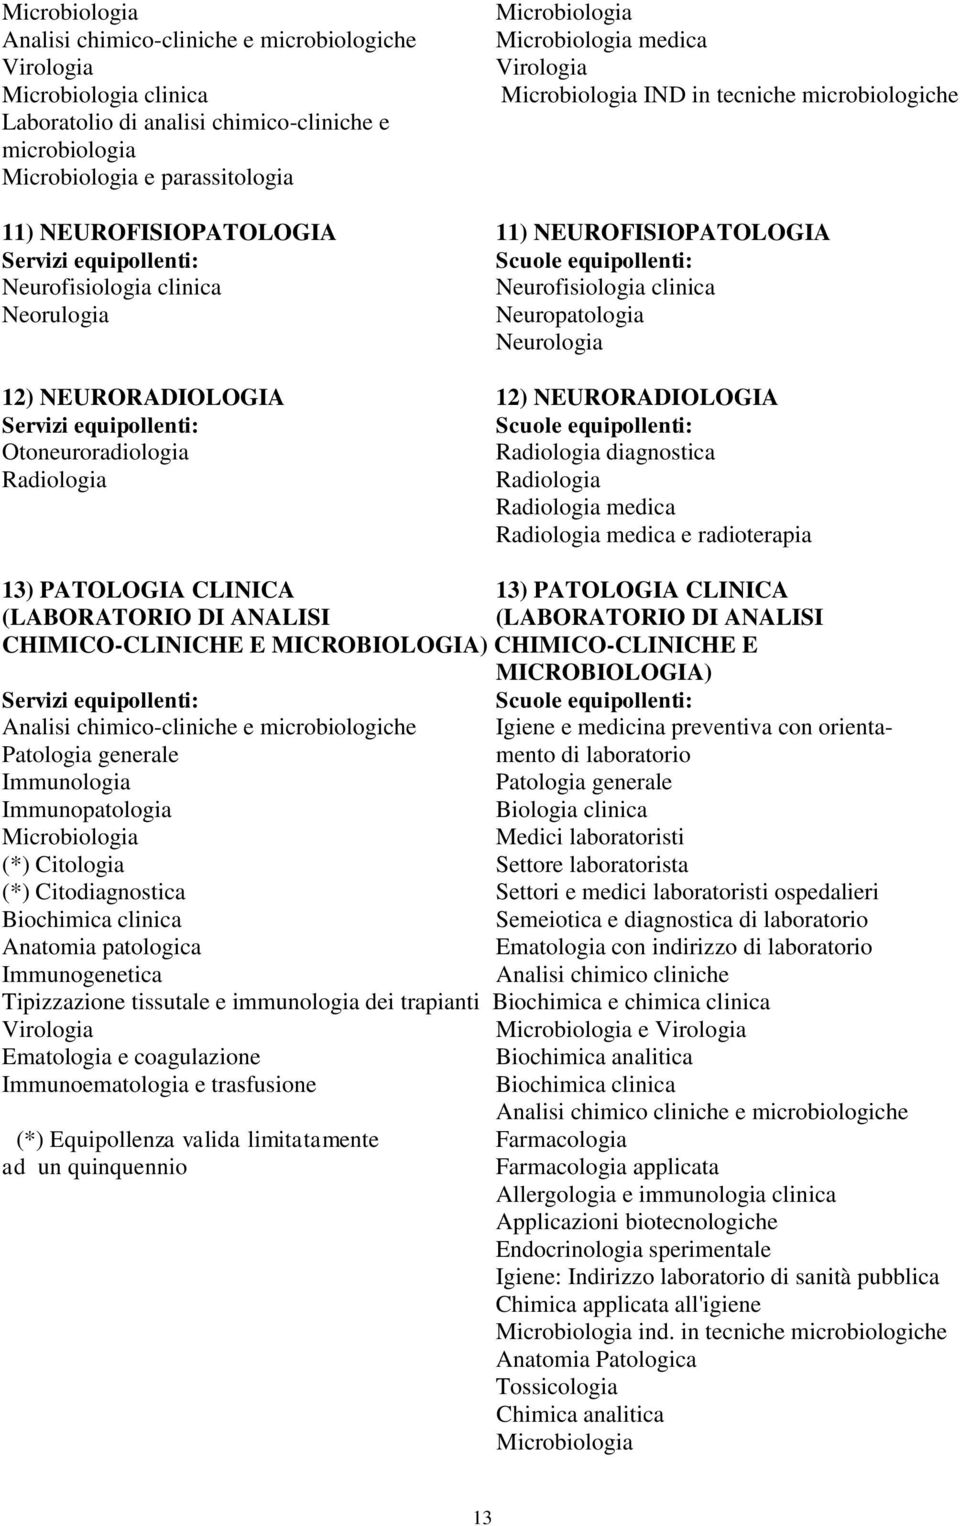 Neurologia 12) NEURORADIOLOGIA 12) NEURORADIOLOGIA Otoneuroradiologia Radiologia diagnostica Radiologia Radiologia Radiologia medica Radiologia medica e radioterapia 13) PATOLOGIA CLINICA 13)